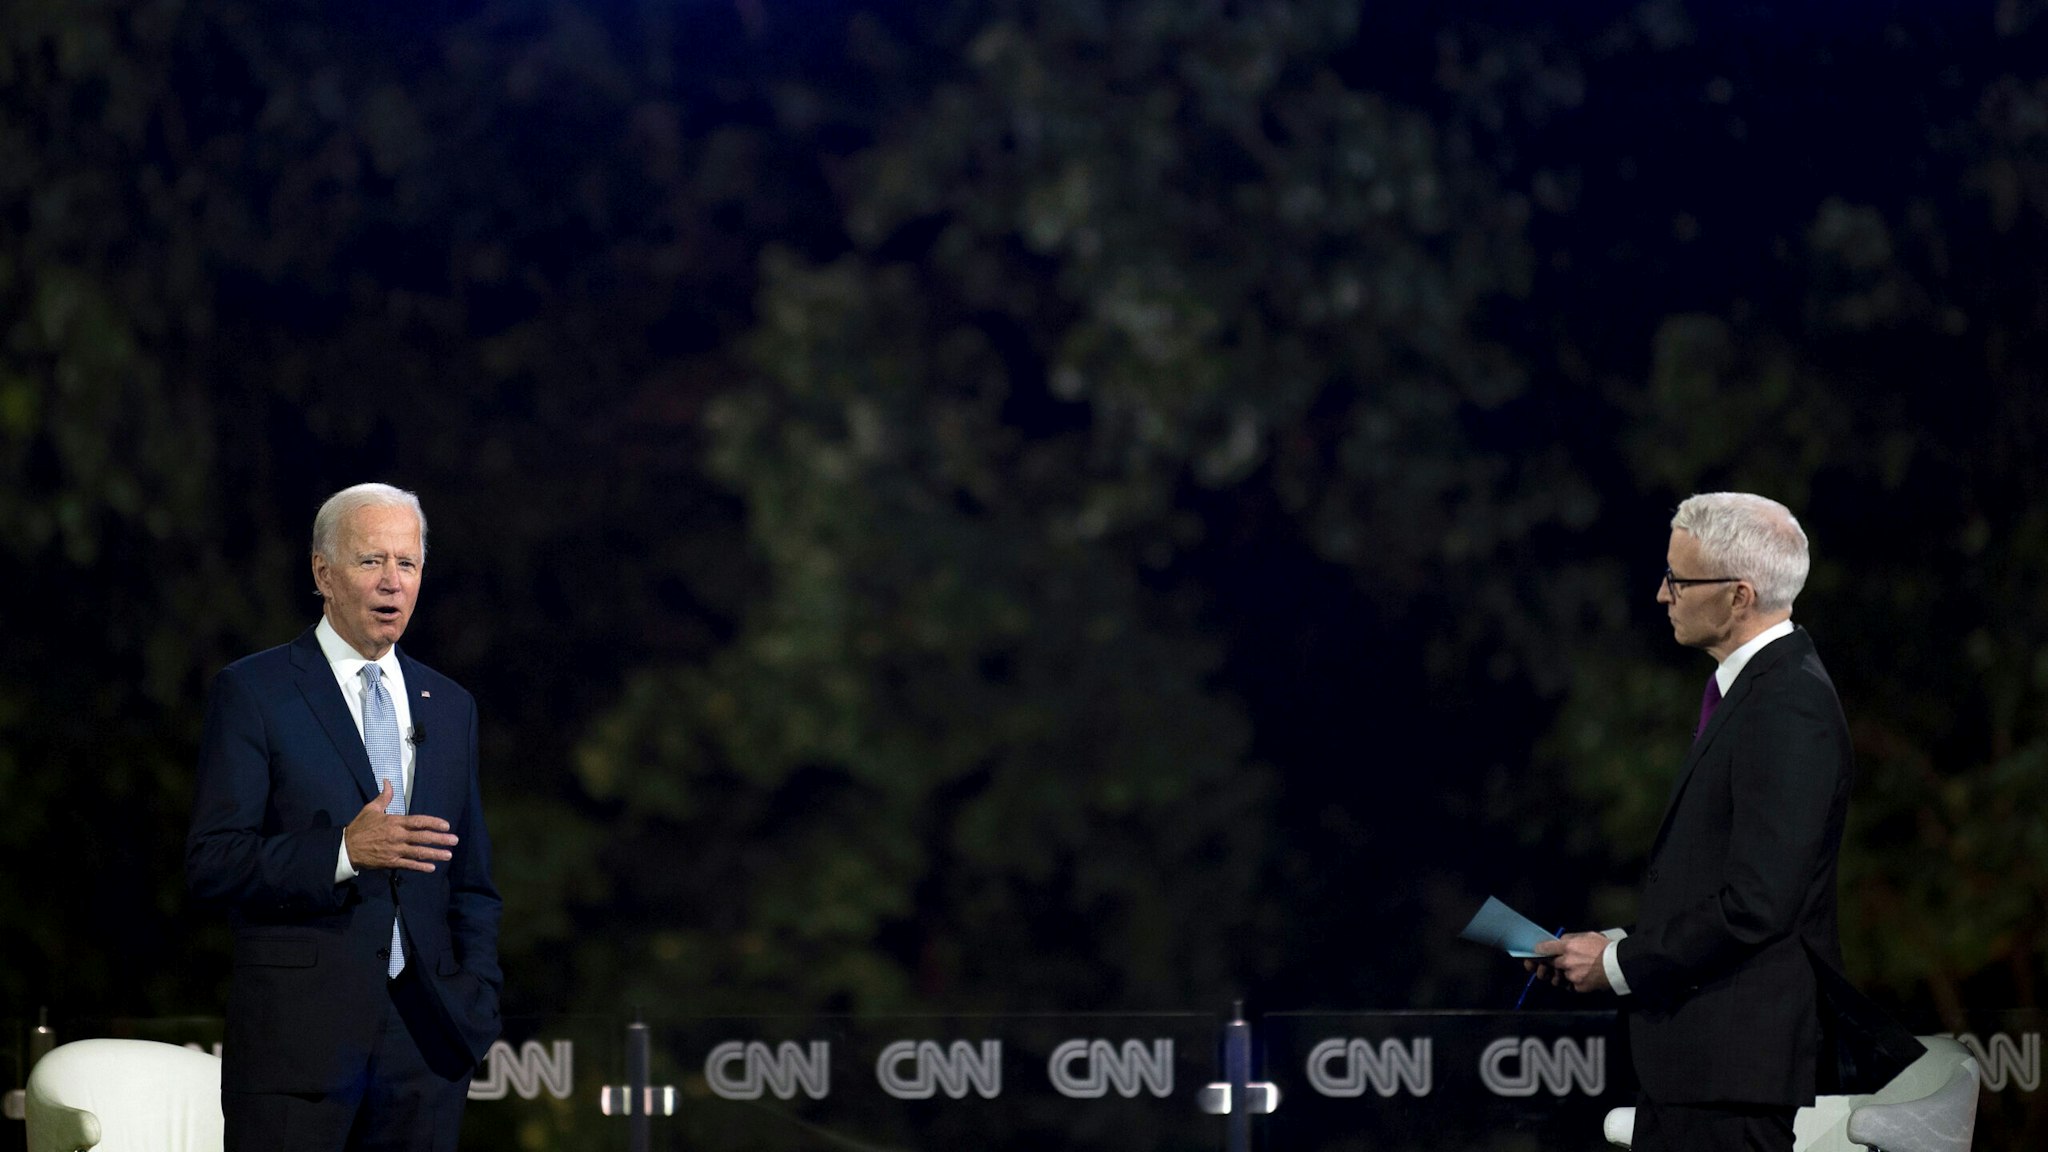 Democratic presidential candidate Joe Biden (L) speaks, alongside journalist Anderson Cooper, during a CNN drive-in Town Hall meeting in Scranton, Pennsylvania, on September 17, 2020.